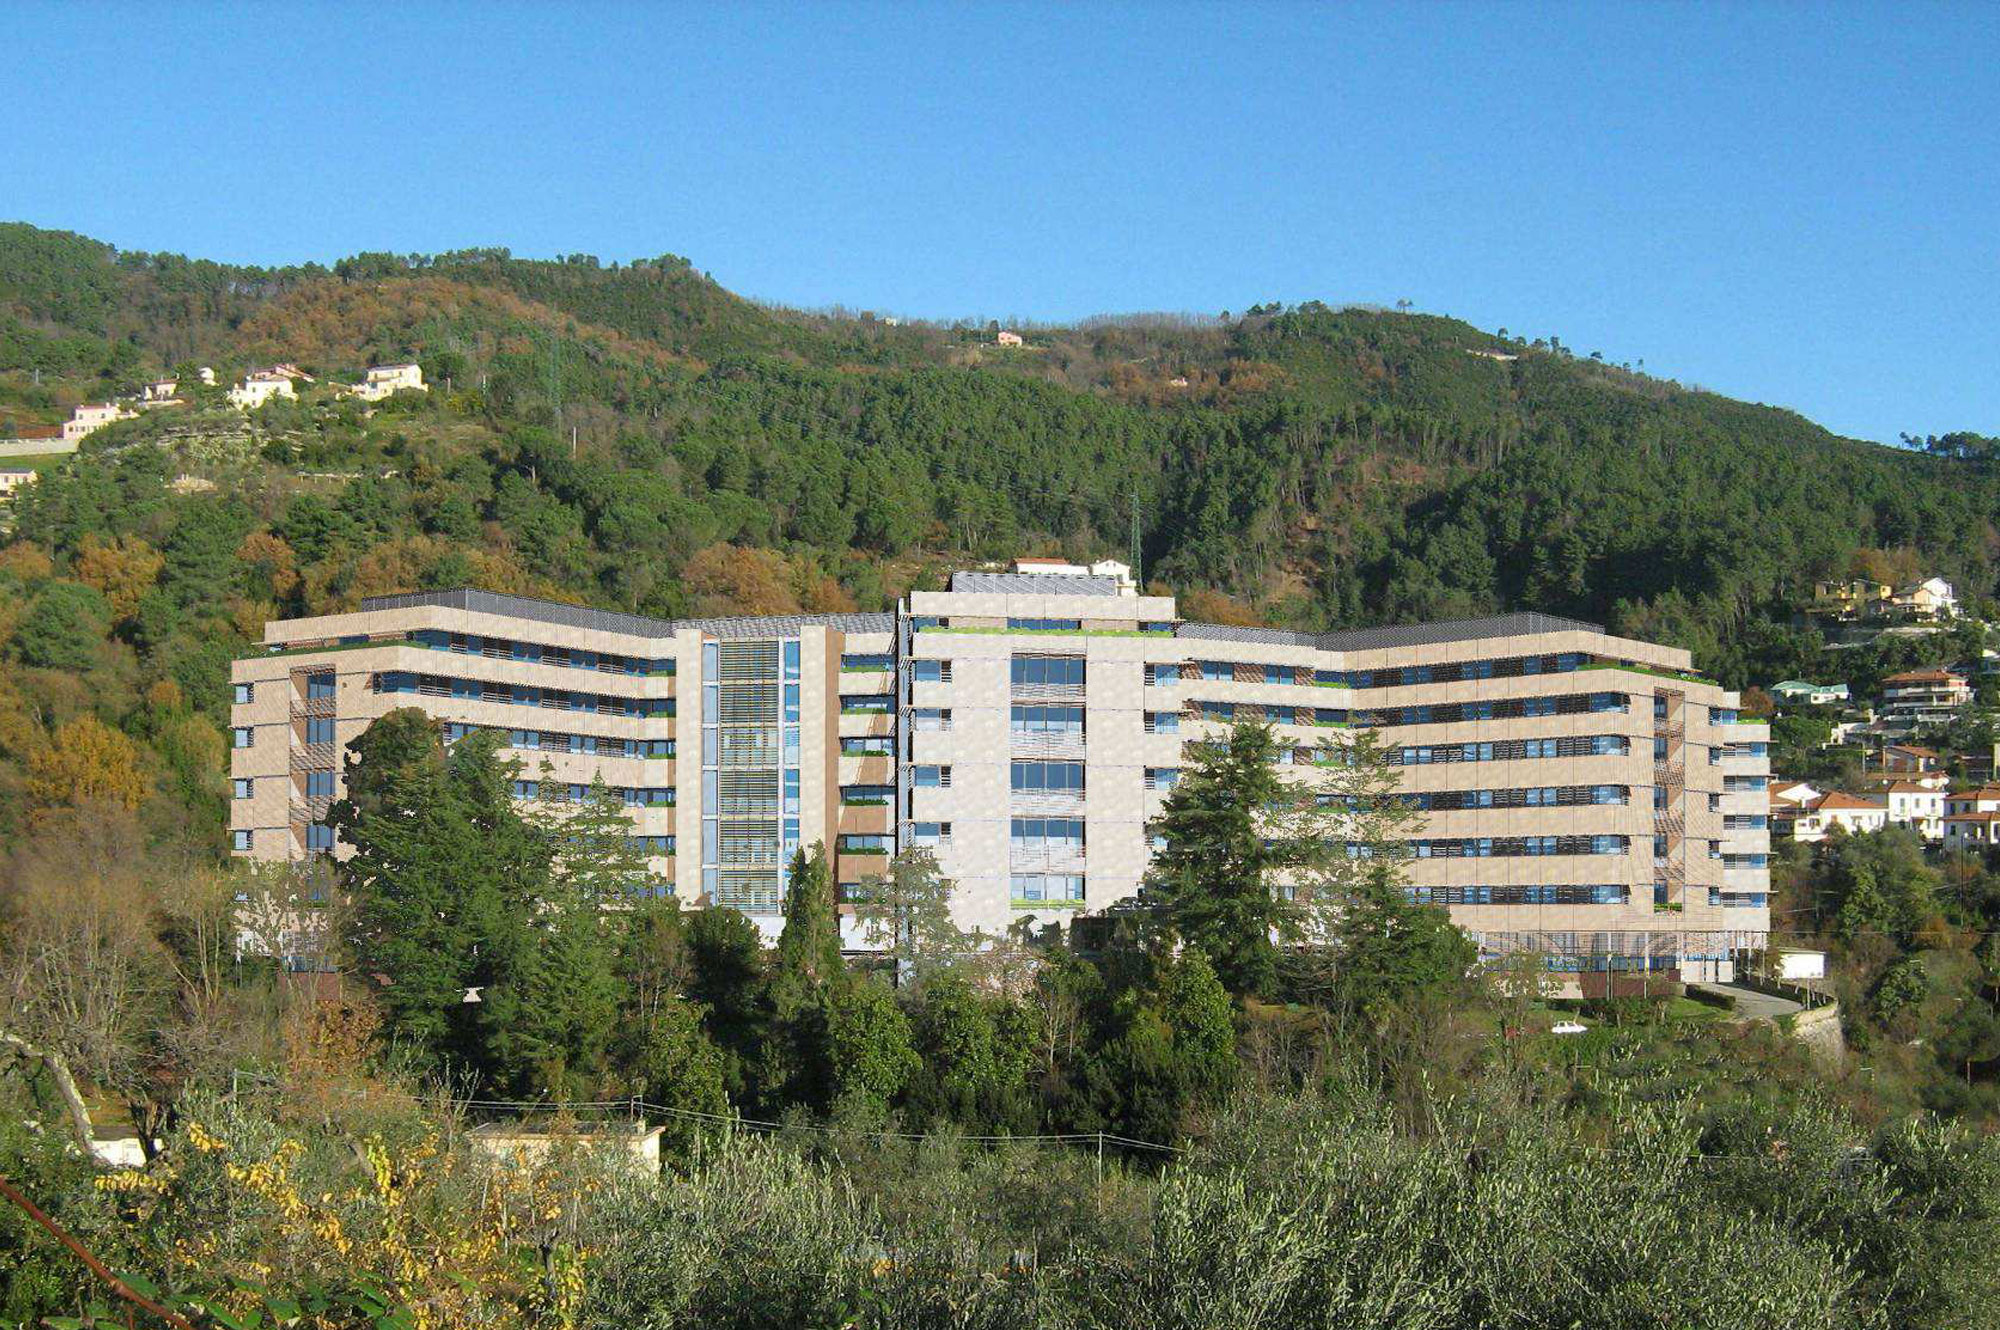 New Hospital in La Spezia